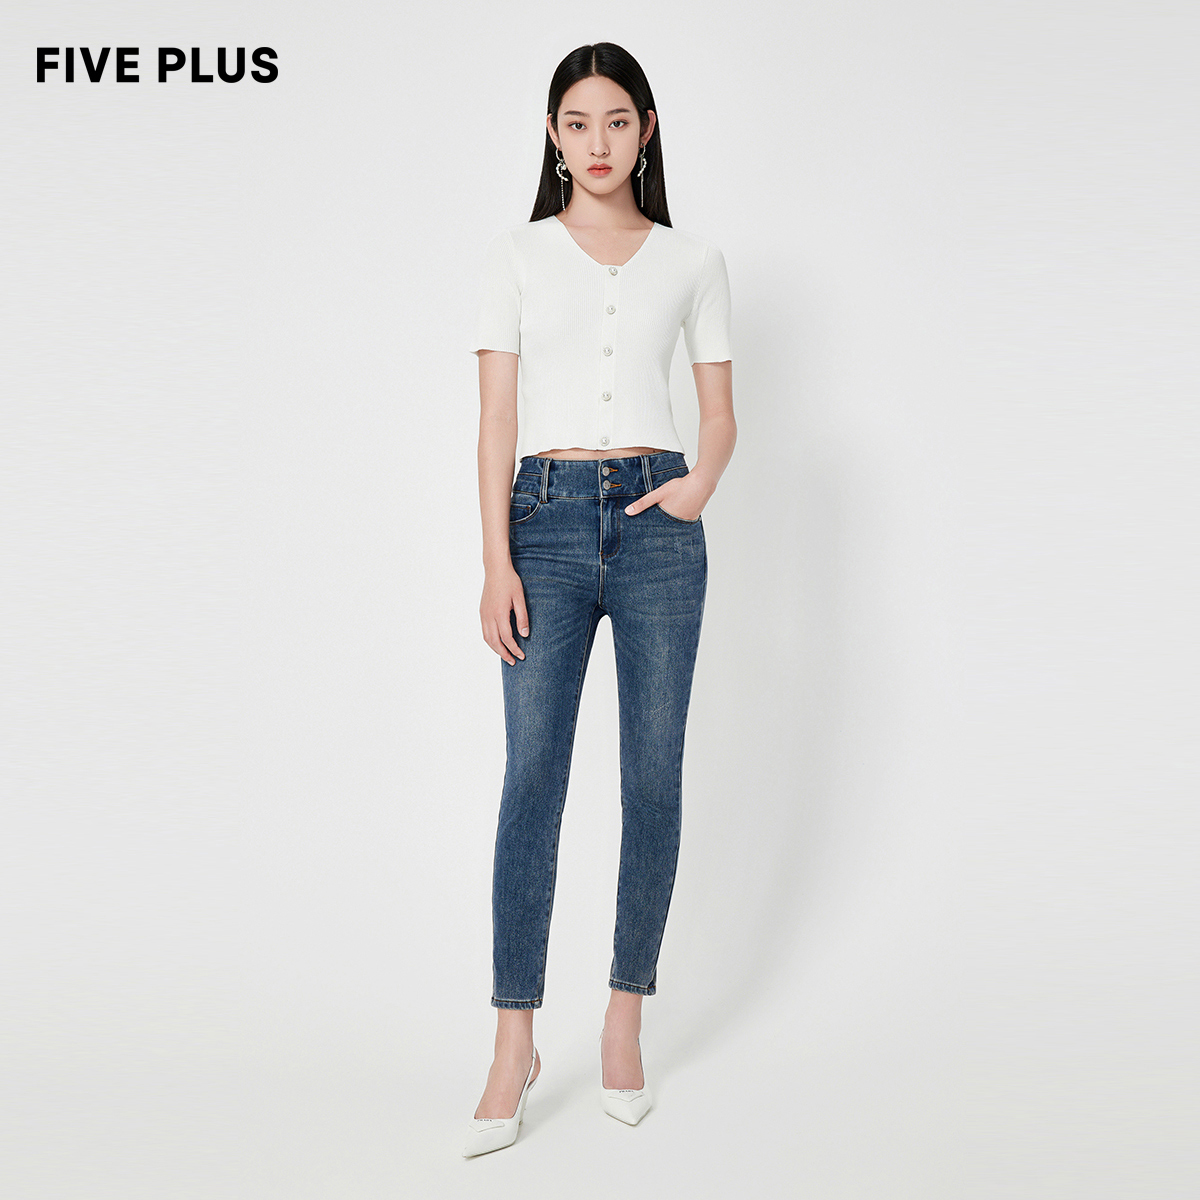 Five Plus 5+ 女冬装火山岩气凝胶牛仔裤女弹力铅笔S裤 129元